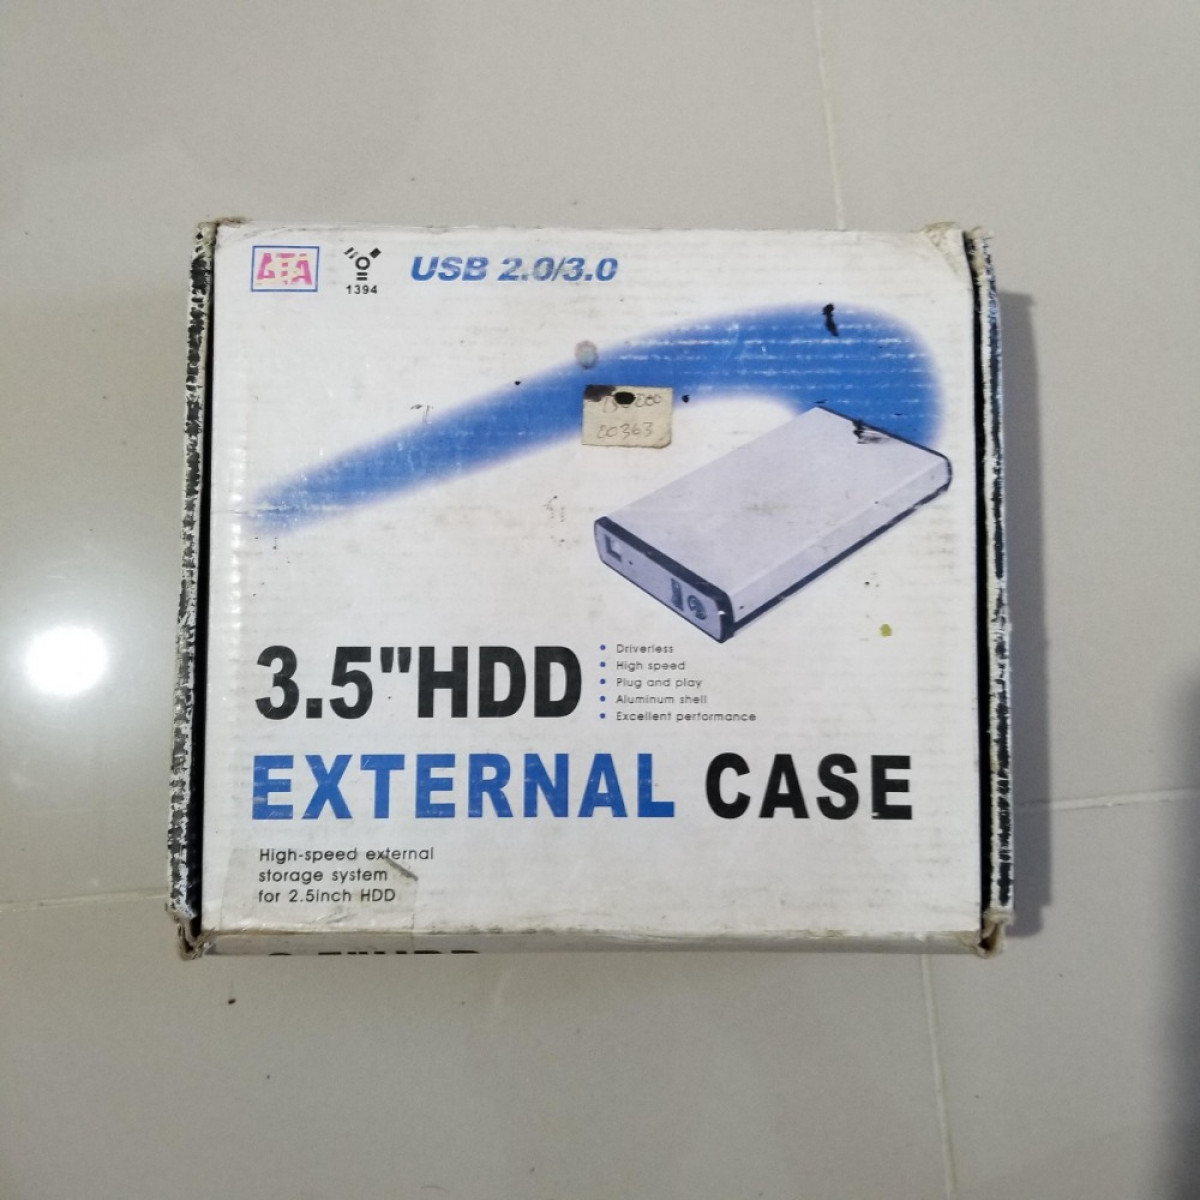 Casing Hardisk External 3.5 Inch External Case Sata to USB